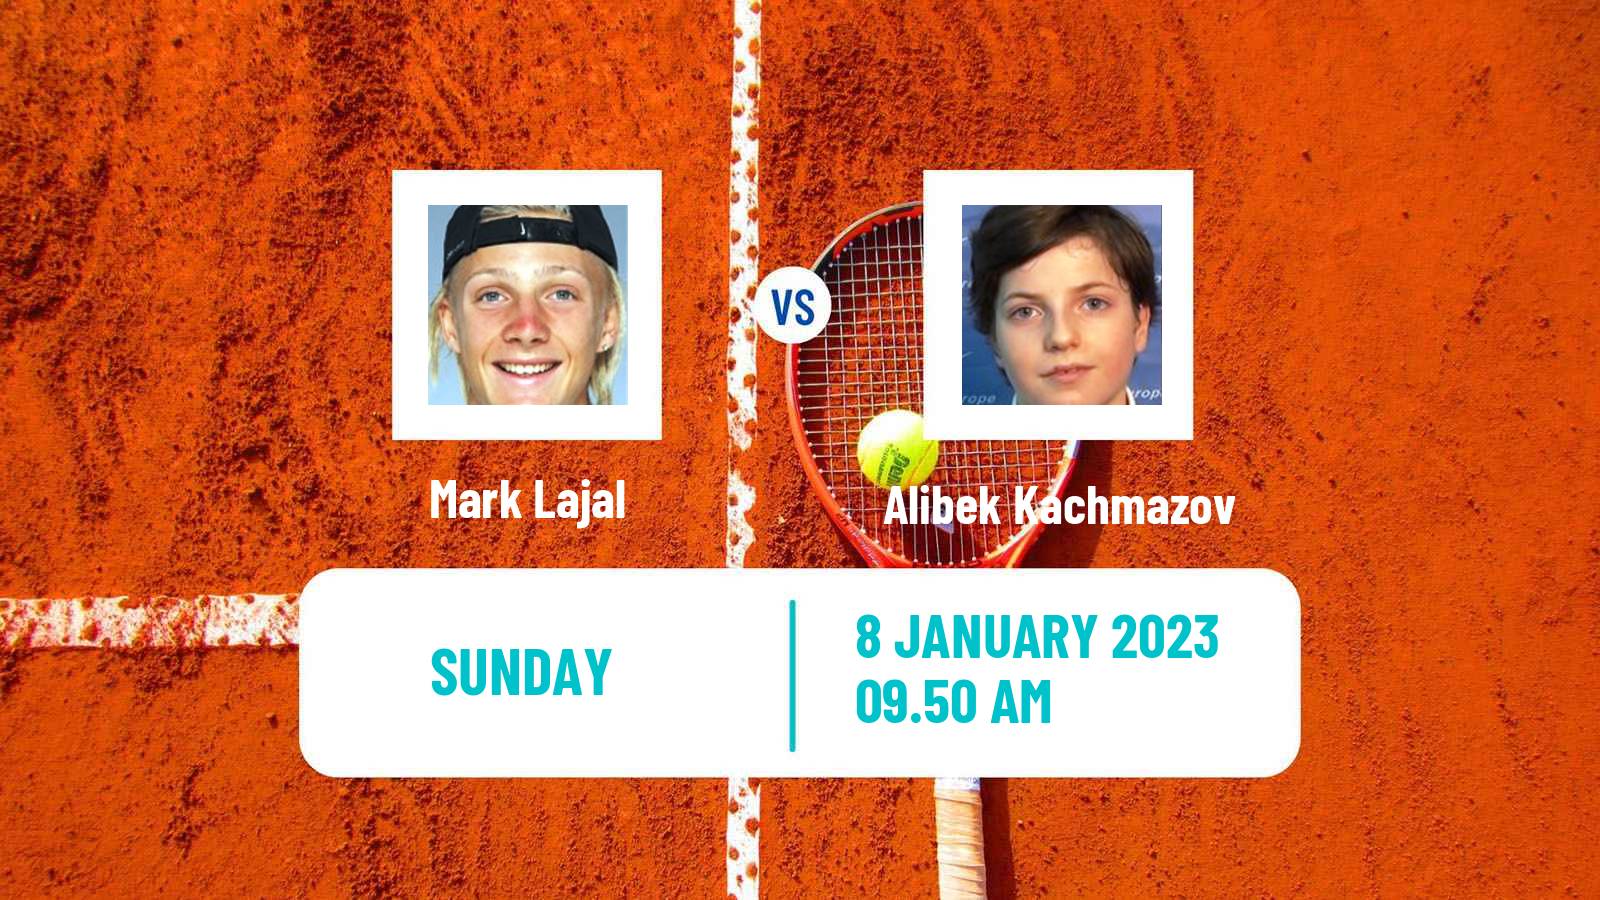 Tennis ATP Challenger Mark Lajal - Alibek Kachmazov